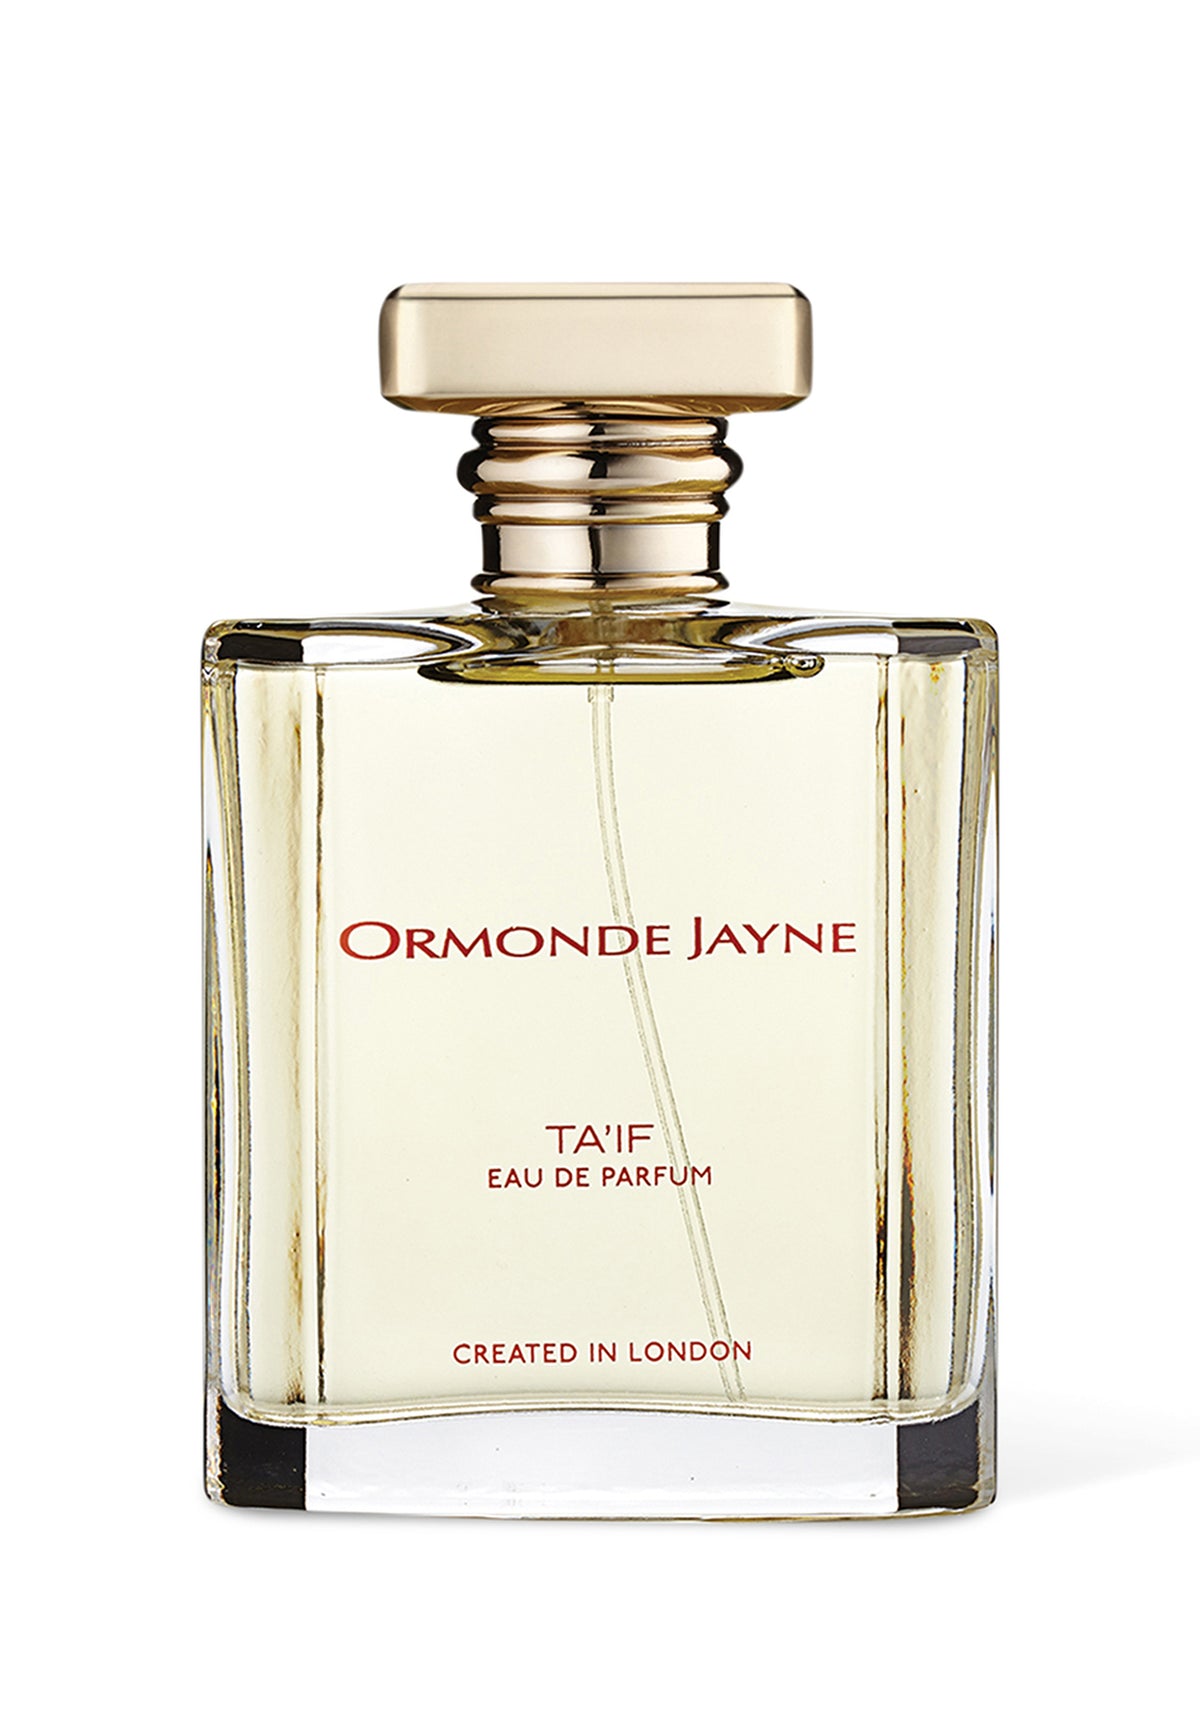 ORMONDE JAYNE Ta'if Eau de Parfum 120ML - Niche Gallery